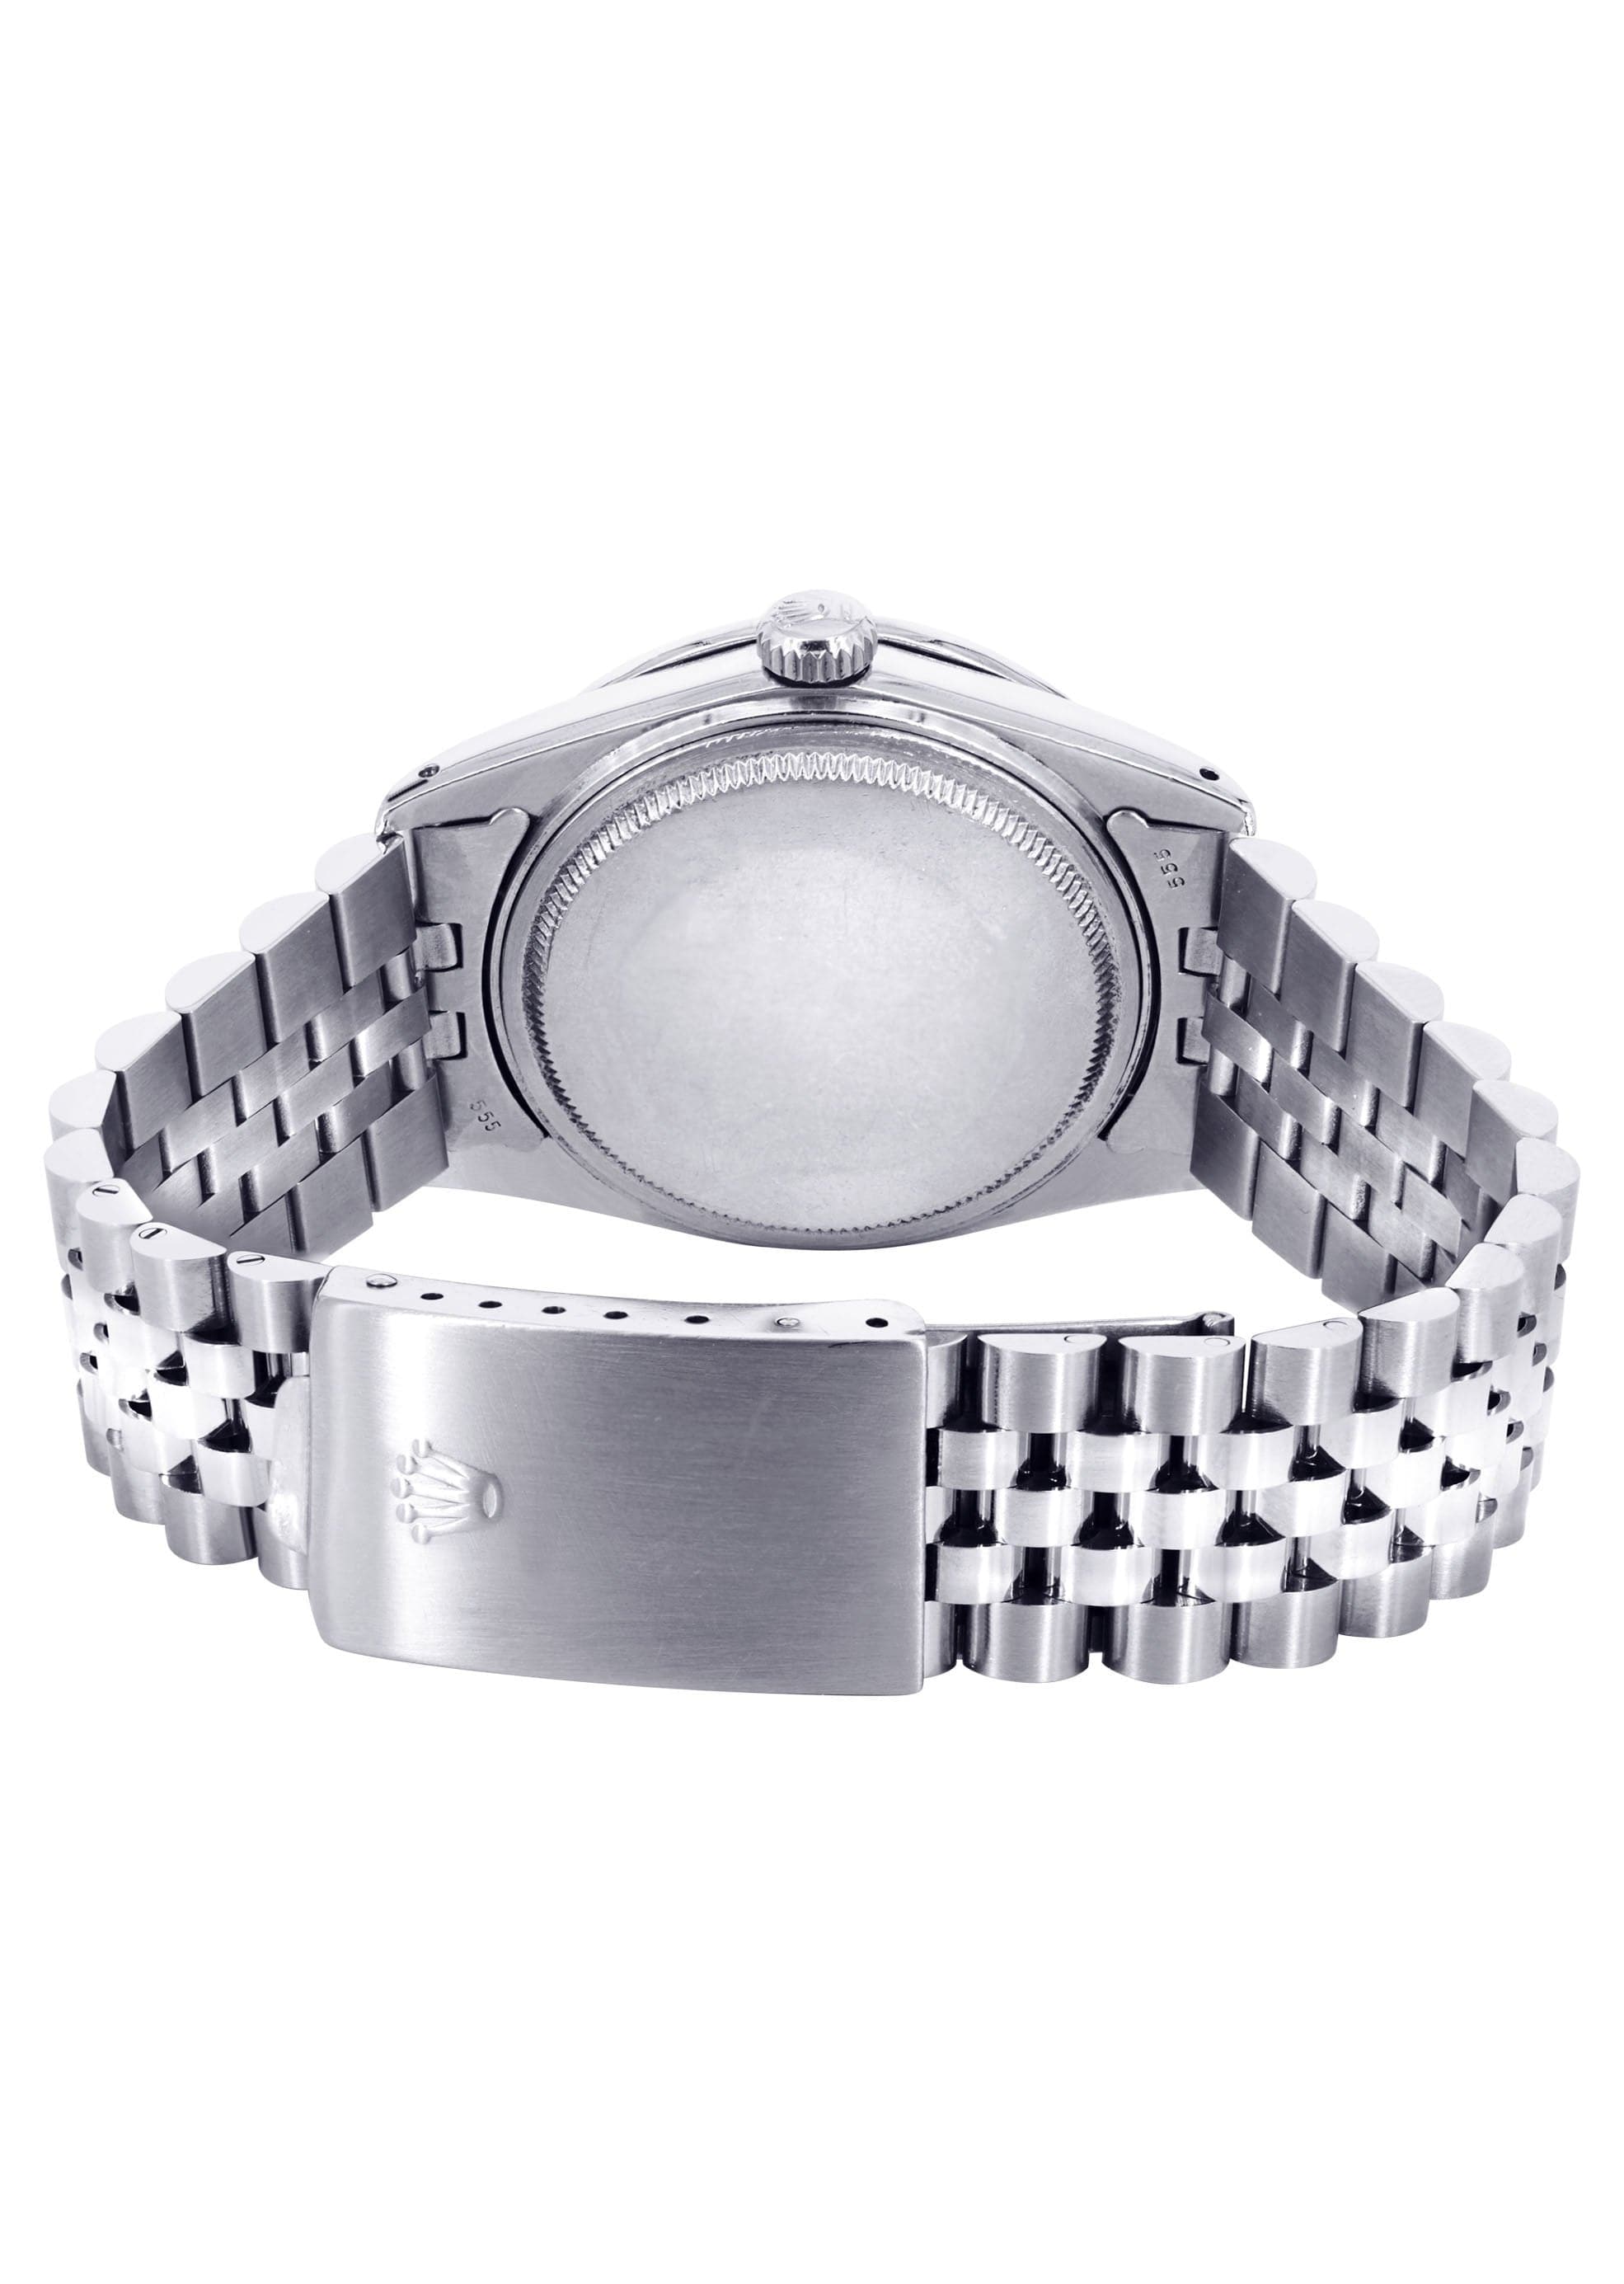 Diamond Gold Rolex Watch For Men 16200 | 36Mm | Rainbow Sapphire Bezel | Pink Flower Pattern Dial | Jubilee Band